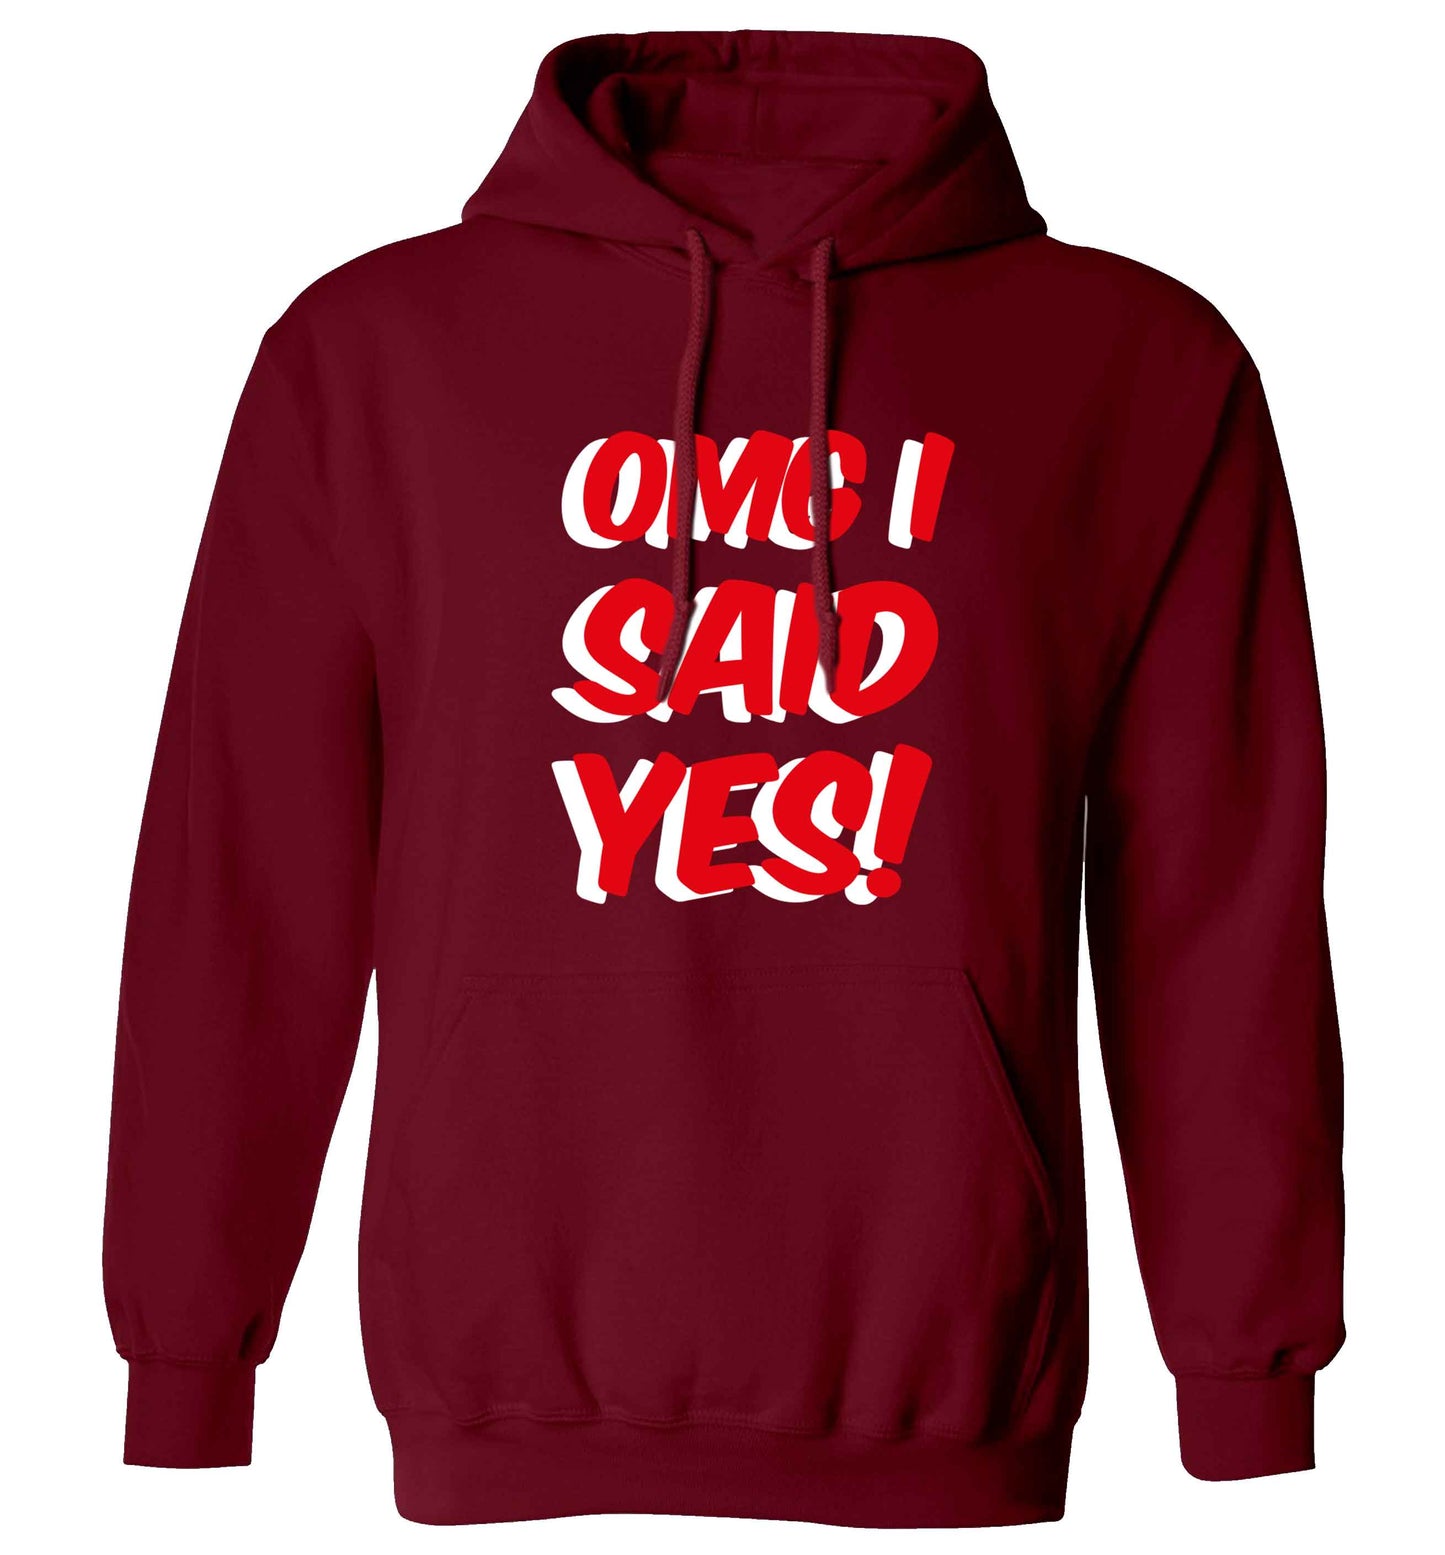 Omg I said yes adults unisex maroon hoodie 2XL